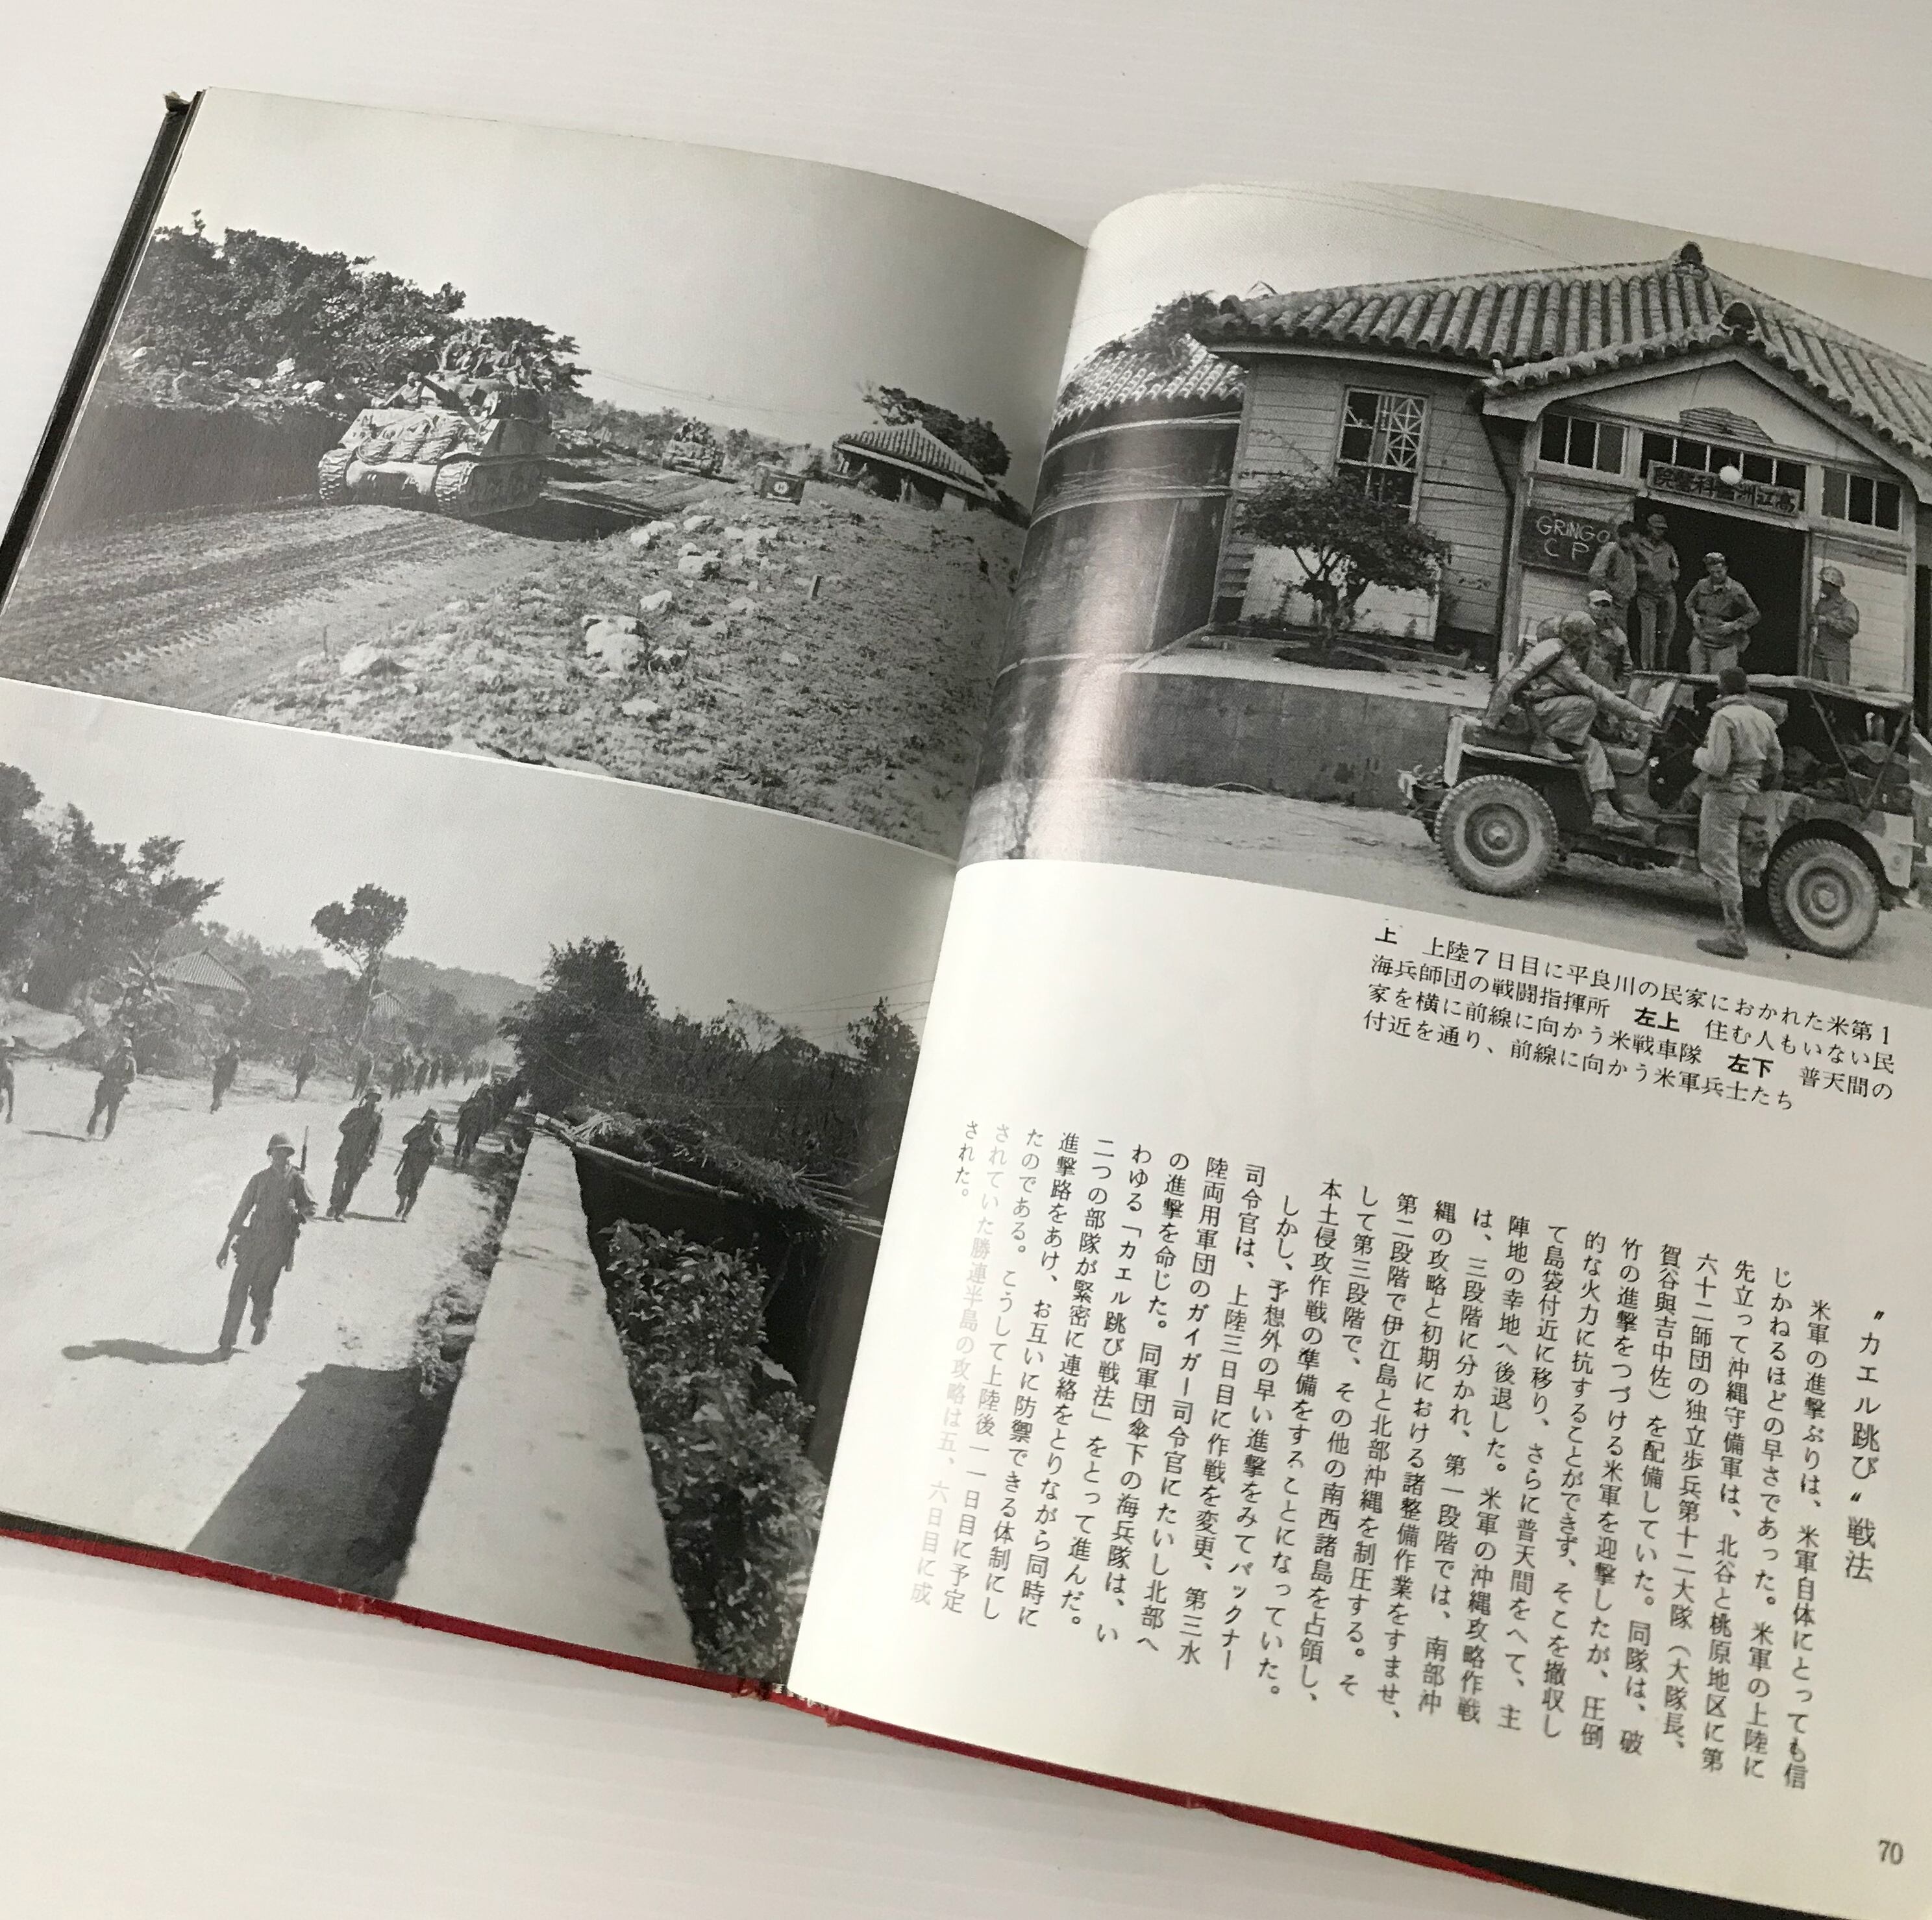 これが沖縄戦だ : 写真記録 改訂版 大田昌秀 編著 琉球新報社 | 古書店